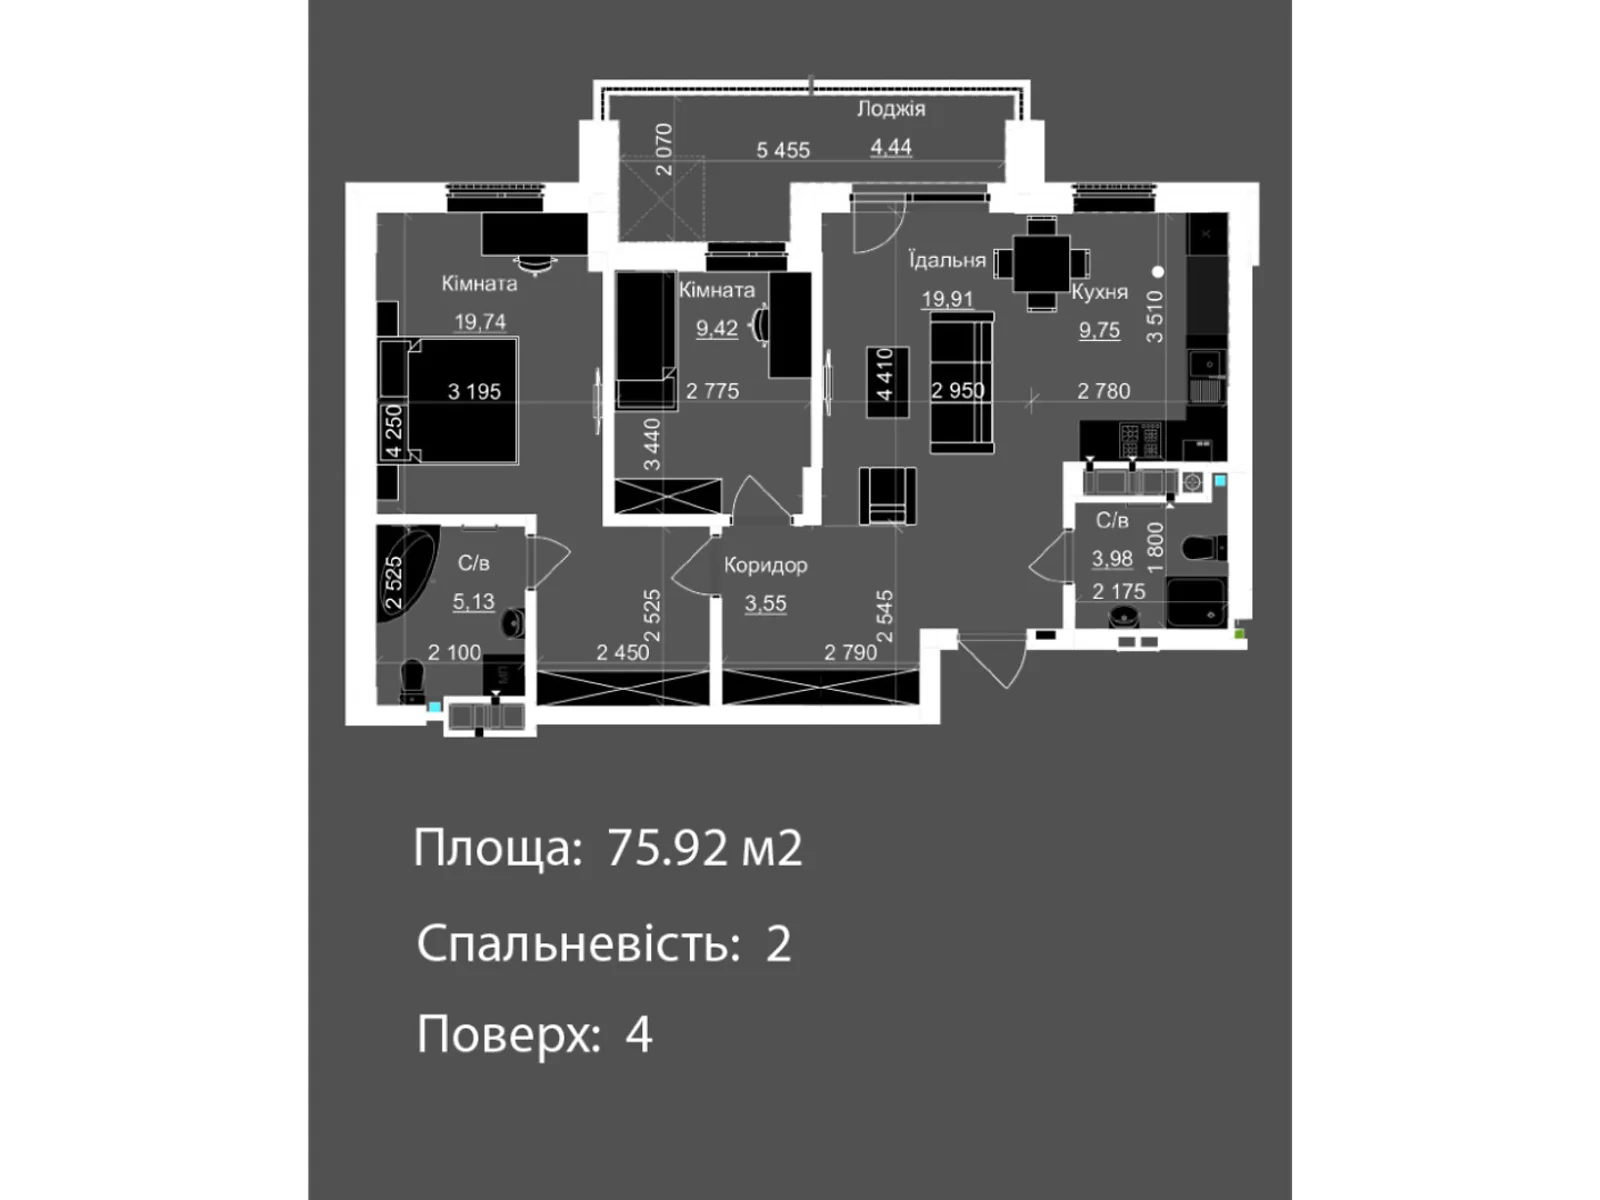 Продается 2-комнатная квартира 75.92 кв. м в Львове, цена: 114184 $ - фото 1